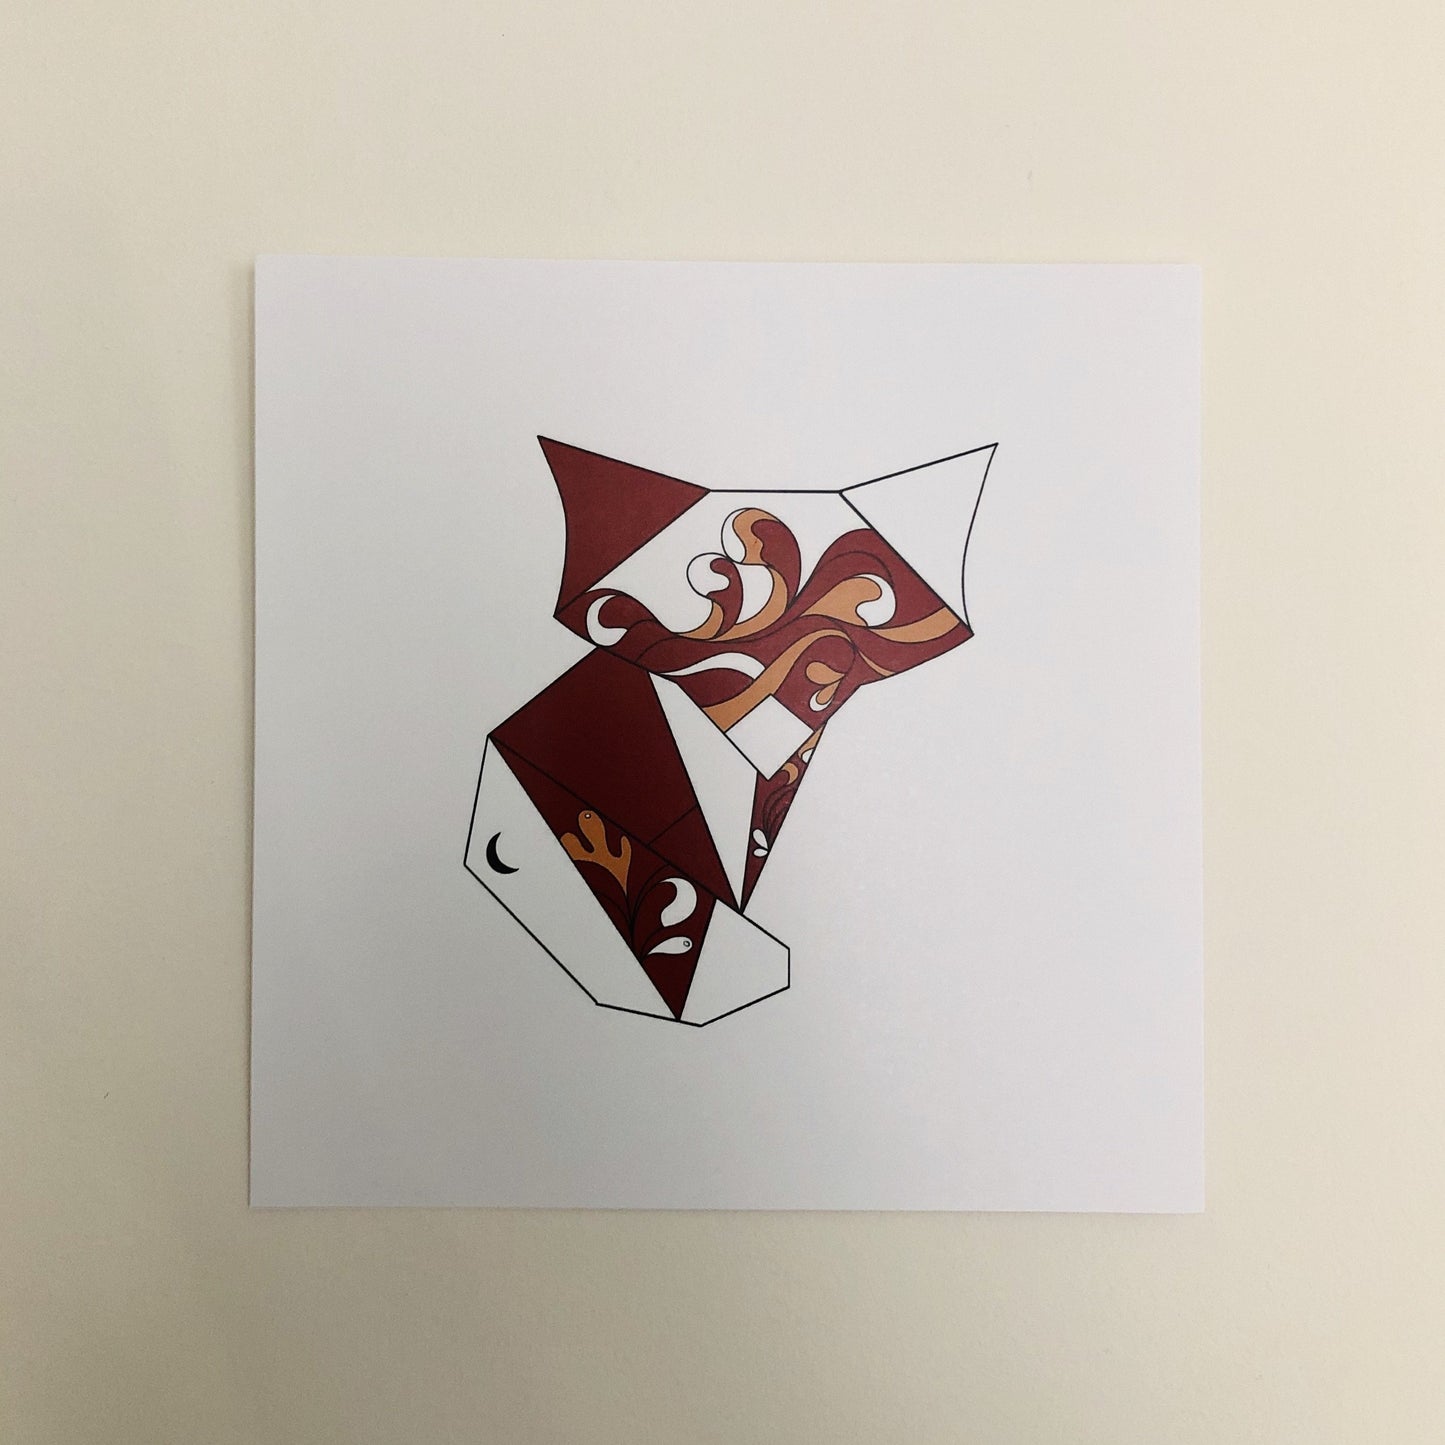 Origami Fox Art Print